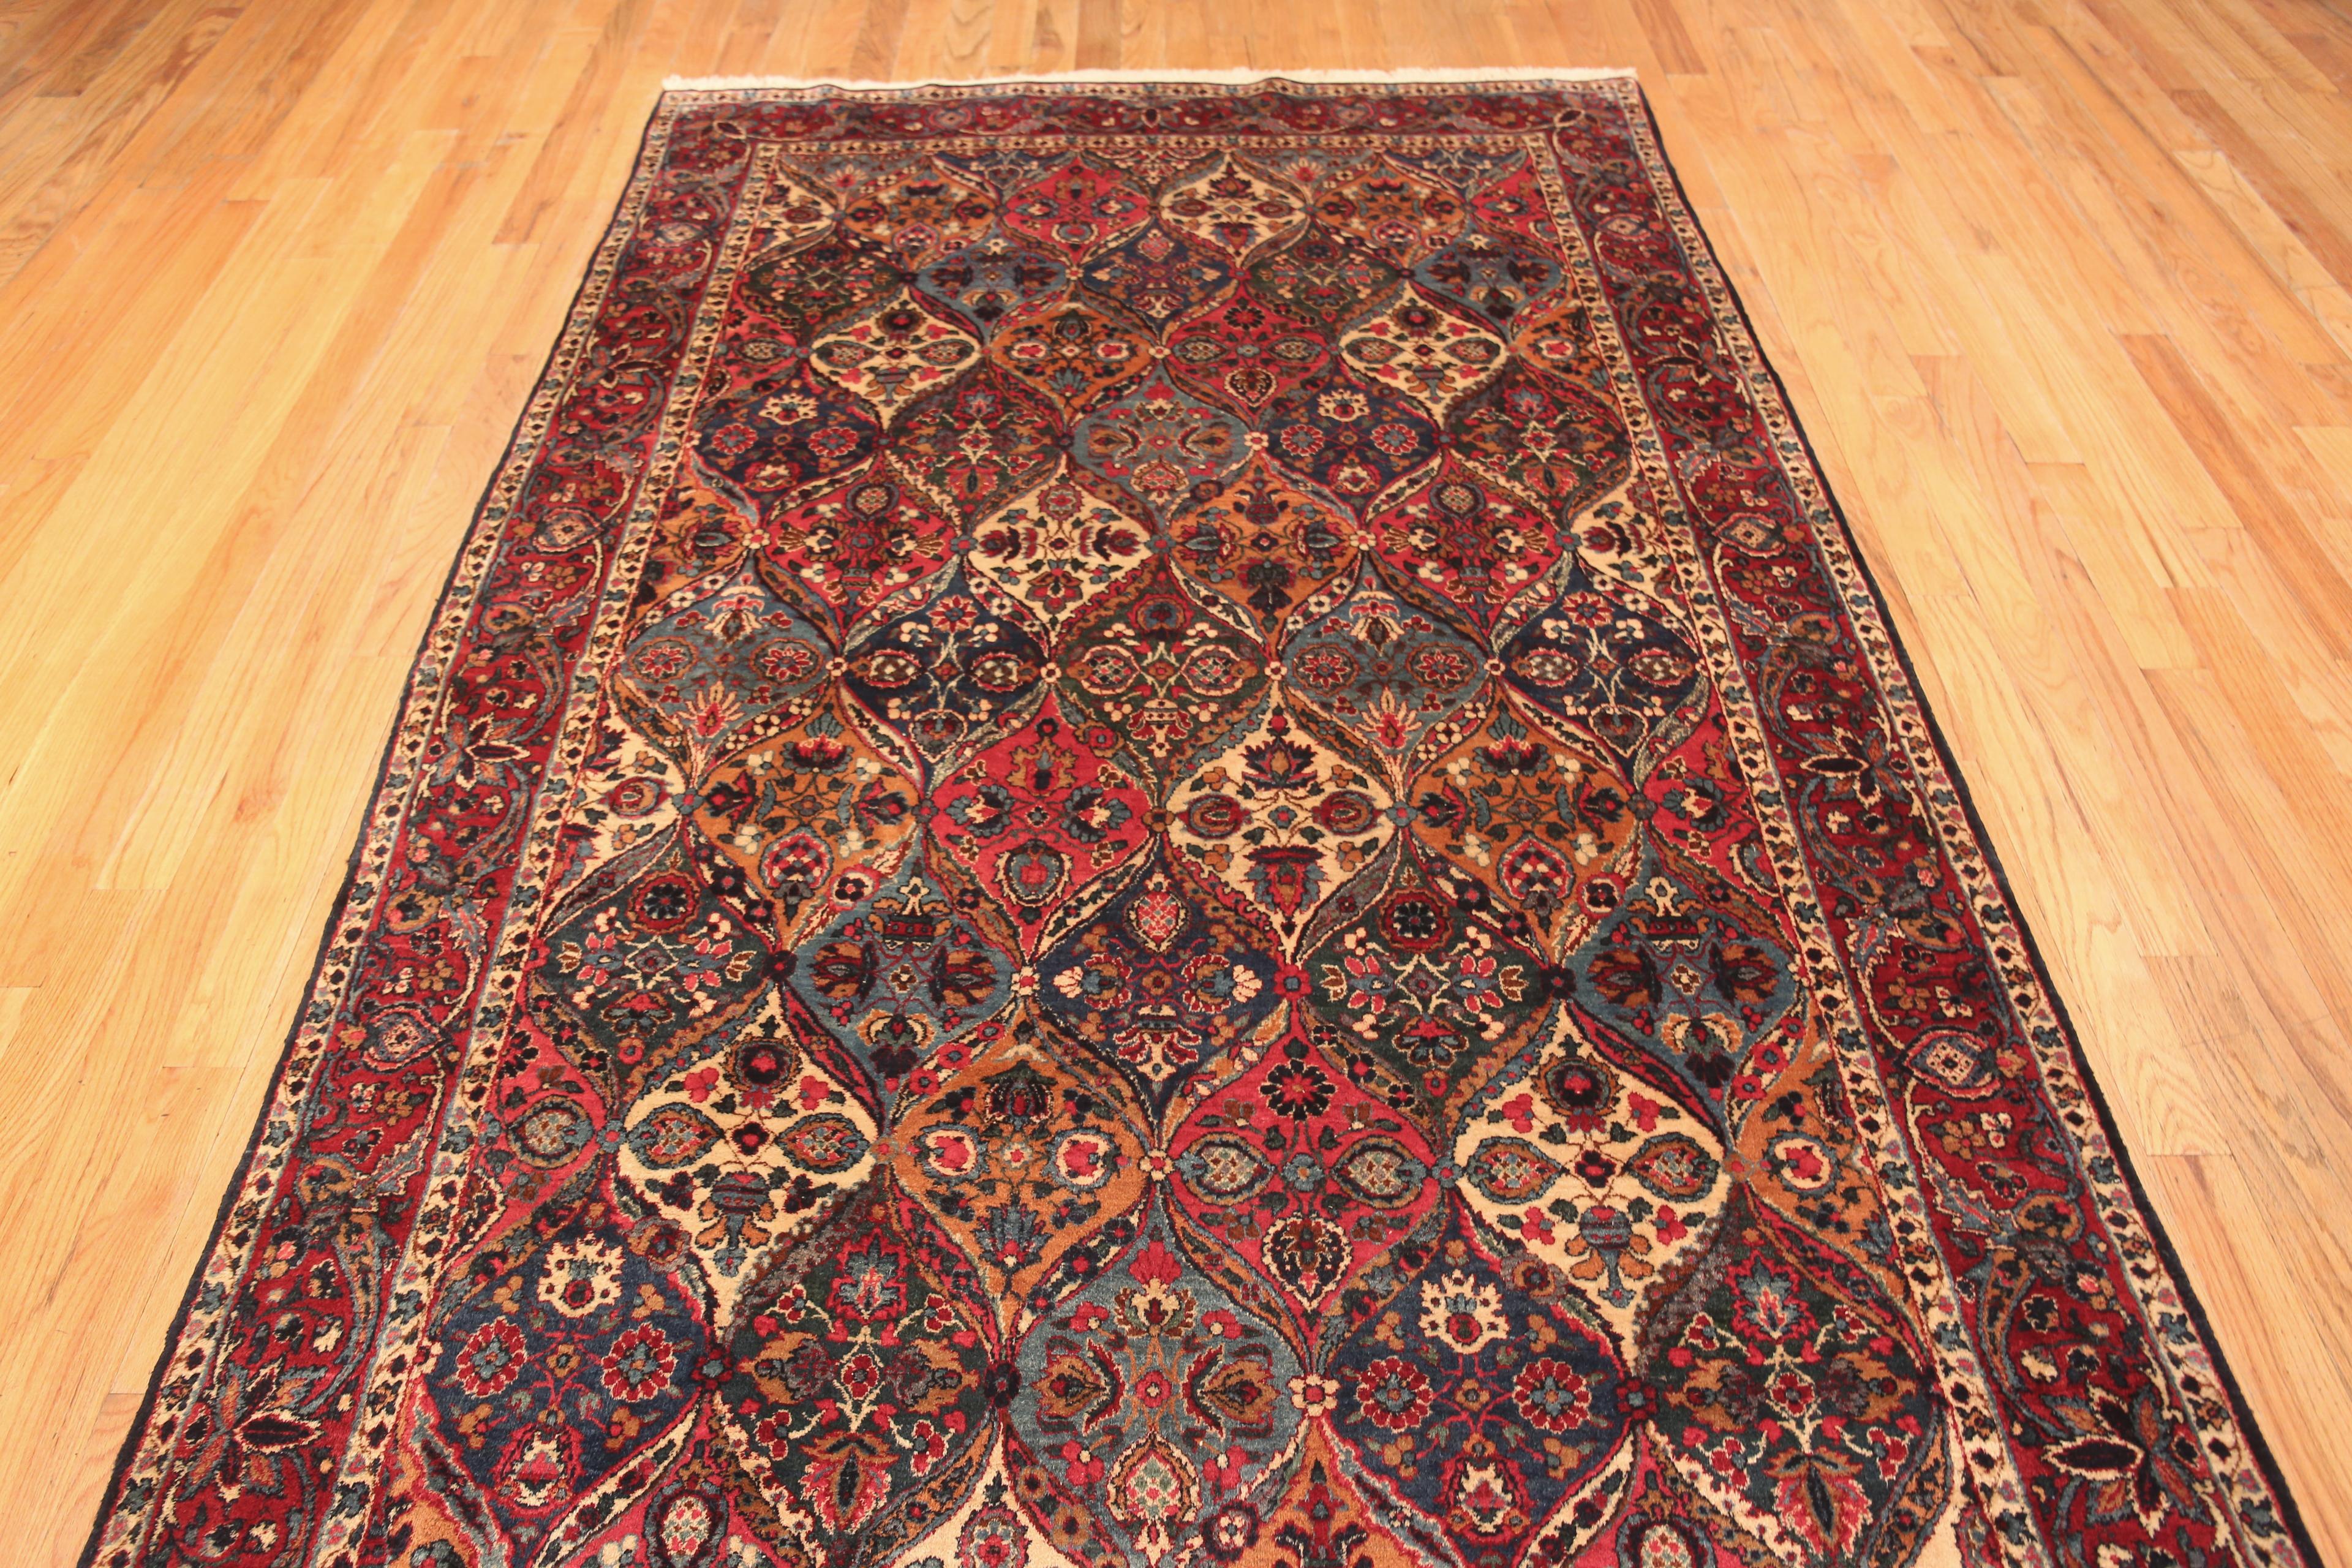 Antique Persian Kerman Runner Rug, Country of origin / rug type: Persian rug, Circa date: 1920. Size: 5 ft 10 in x 17 ft 9 in (1.78 m x 5.41 m)
 